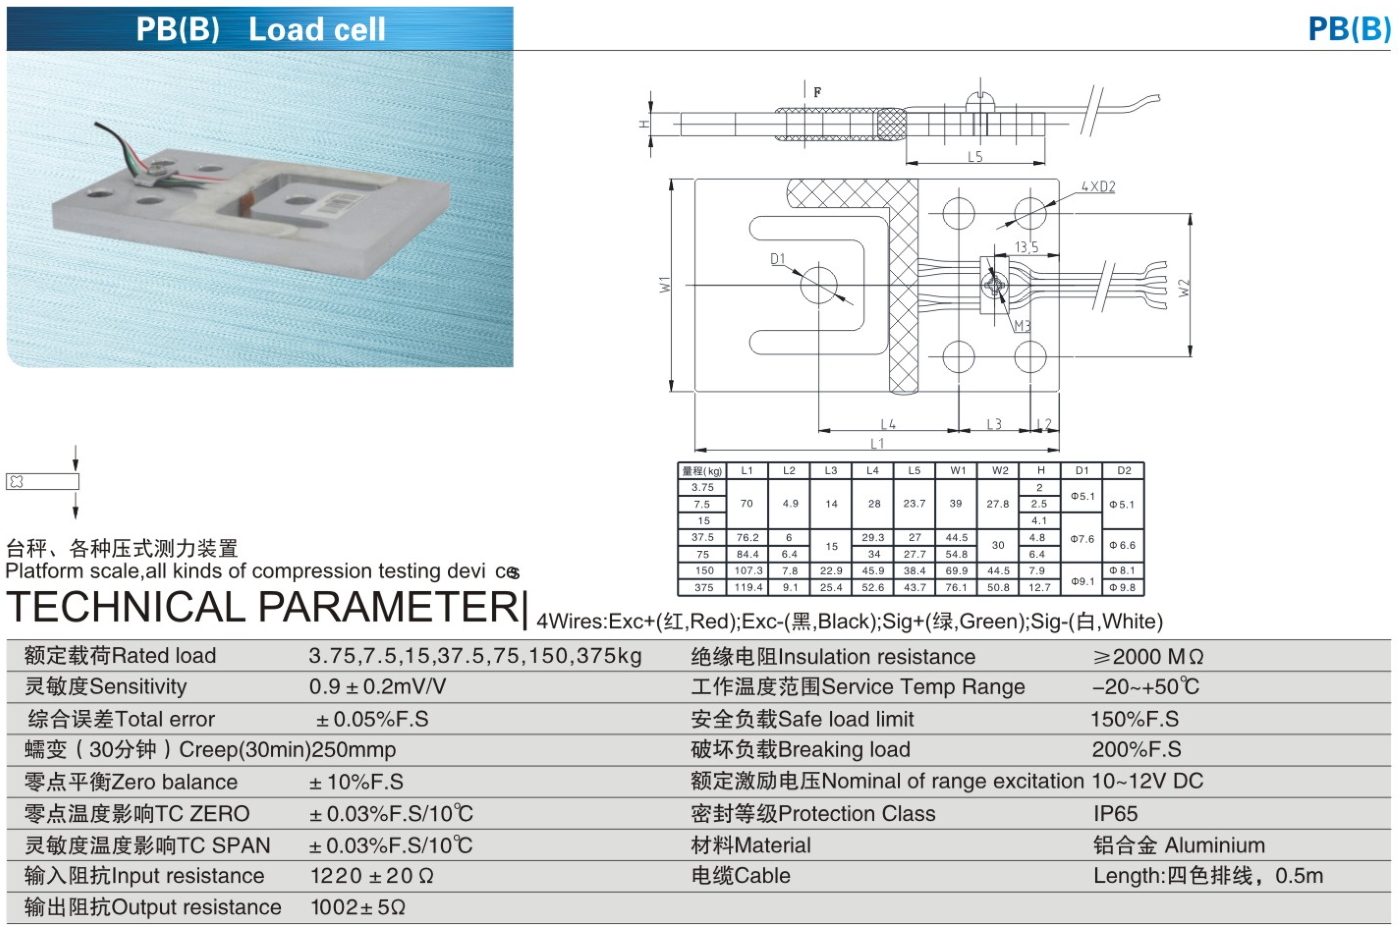 img/loadcell-images/aluminium-singlepoint/KELI_PB(B)_Loadcell-TTM_Teknoloji.jpg